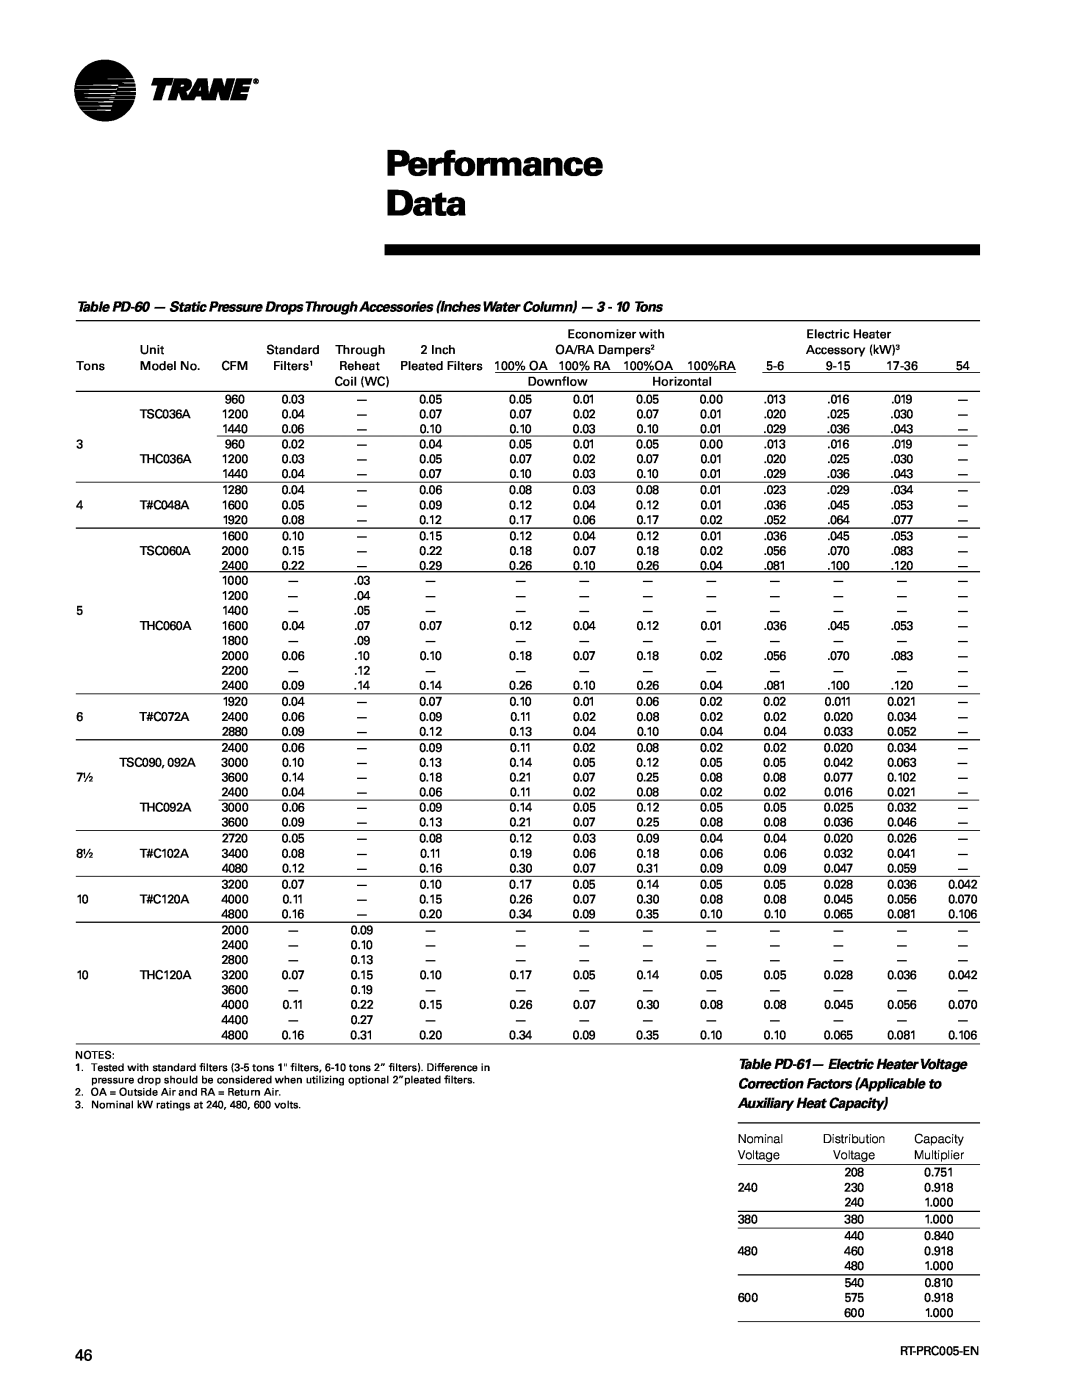 Trane RT-PRC005 manual Performance Data, Economizer with 